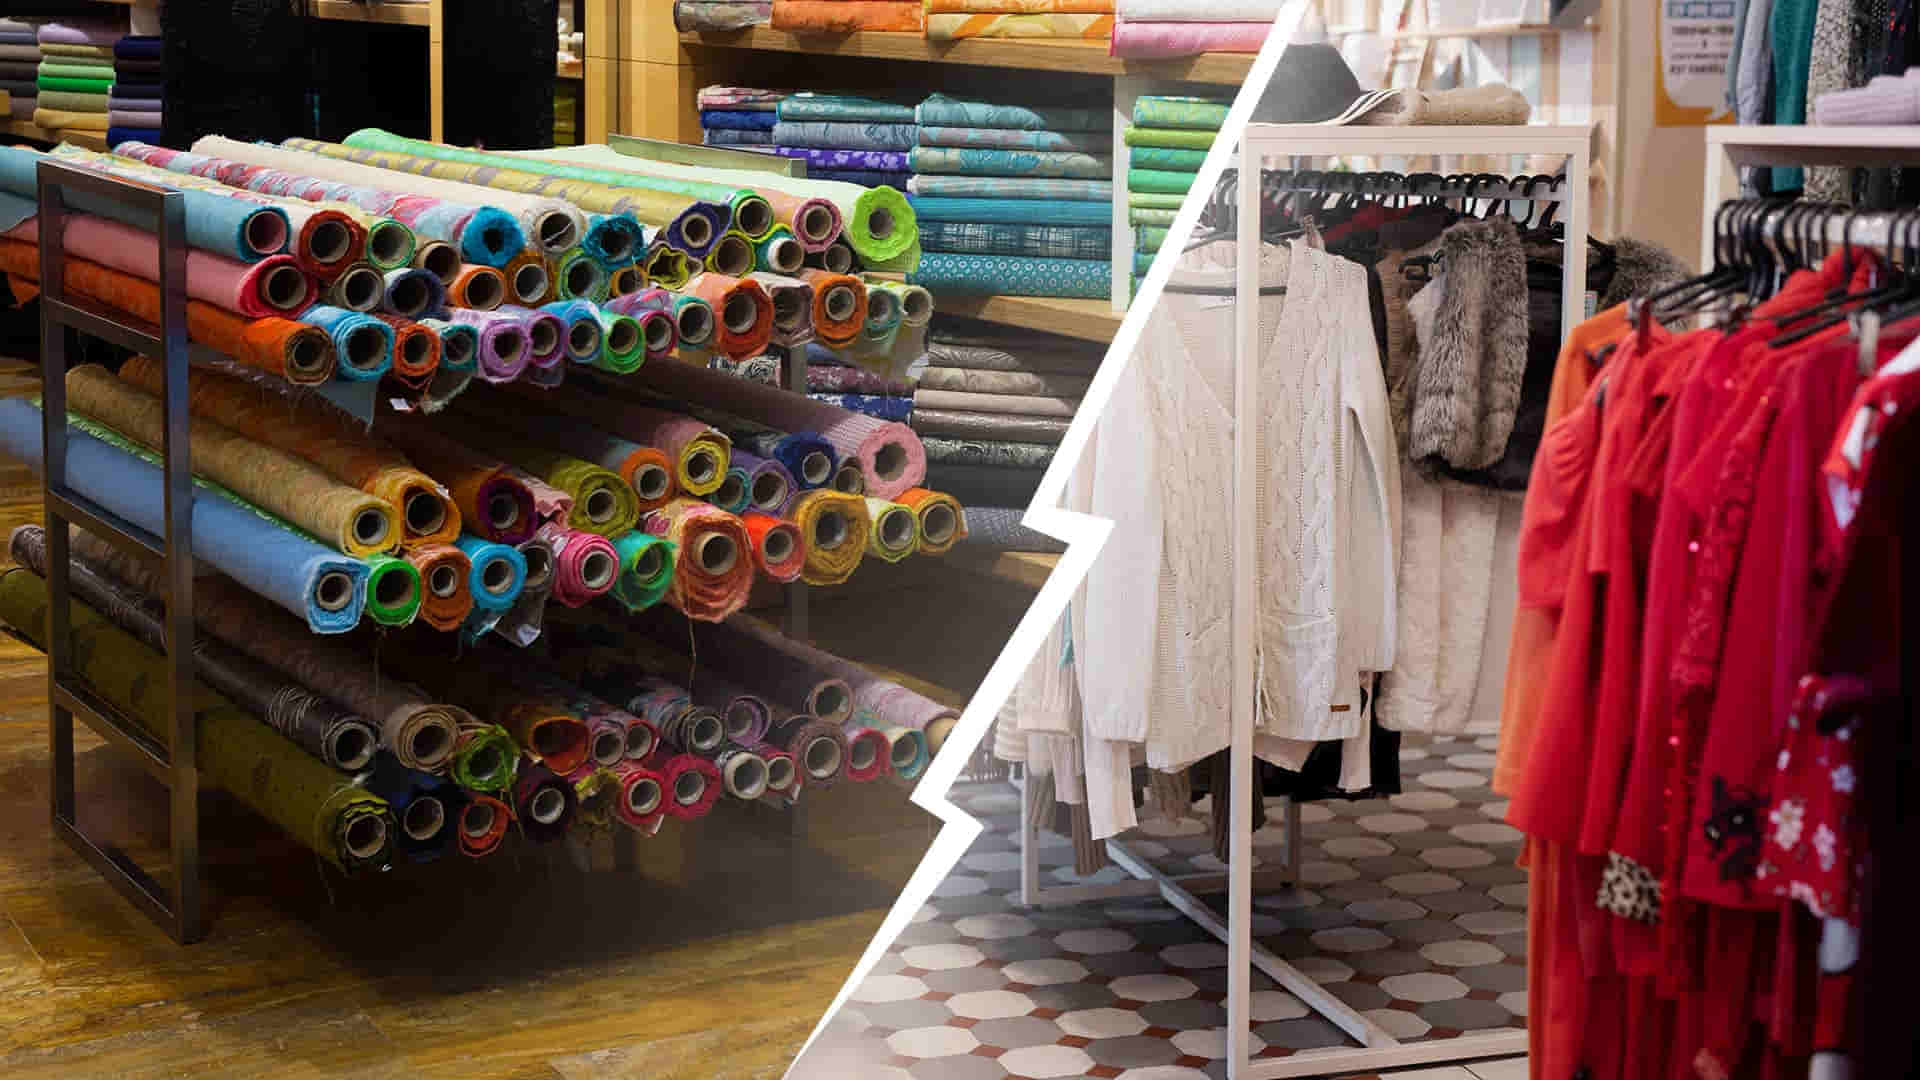 Additional Customs Duties bring apparel manufacturers up against textile manufacturers  Image Source: Freepik